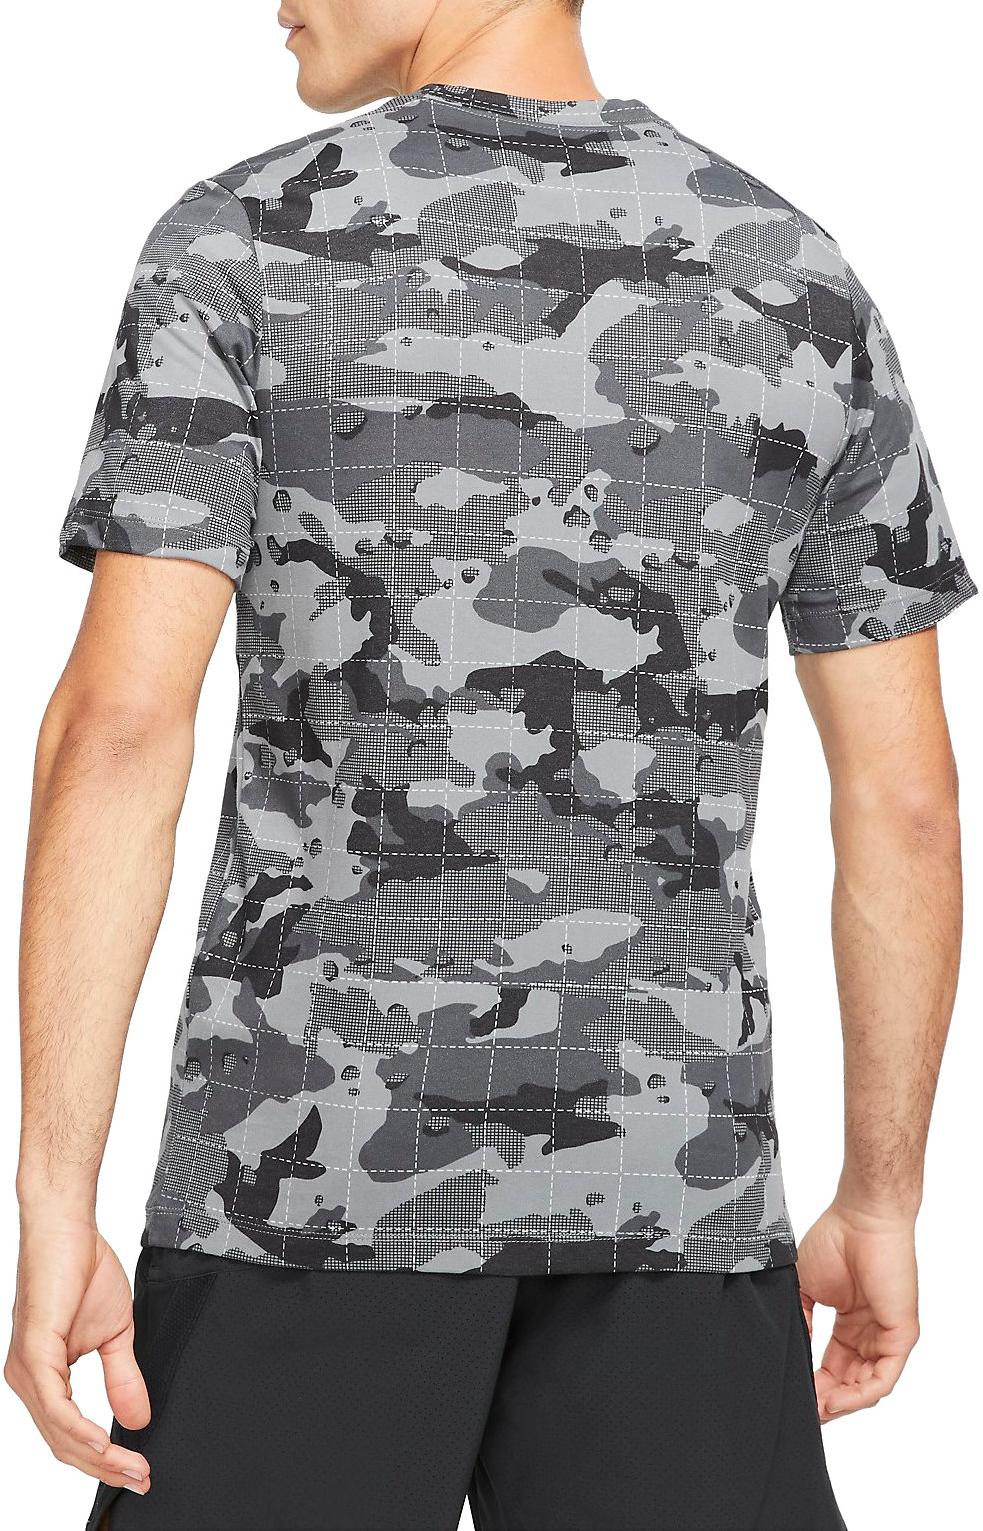 Nike Dri-FIT Men's Camo Training T-Shirt.